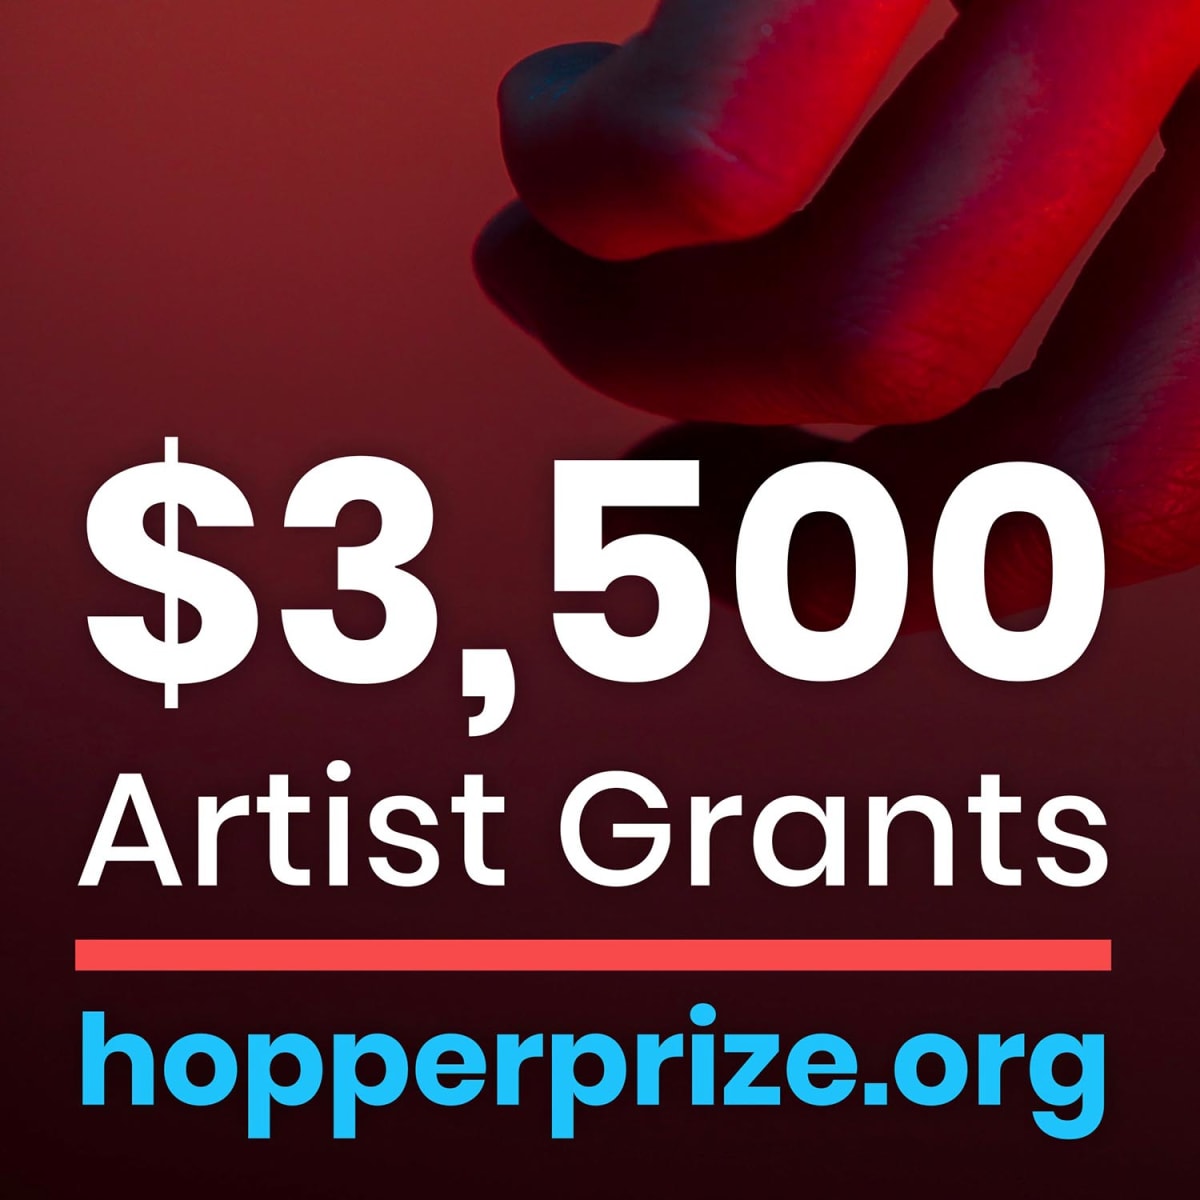 The Hopper Prize